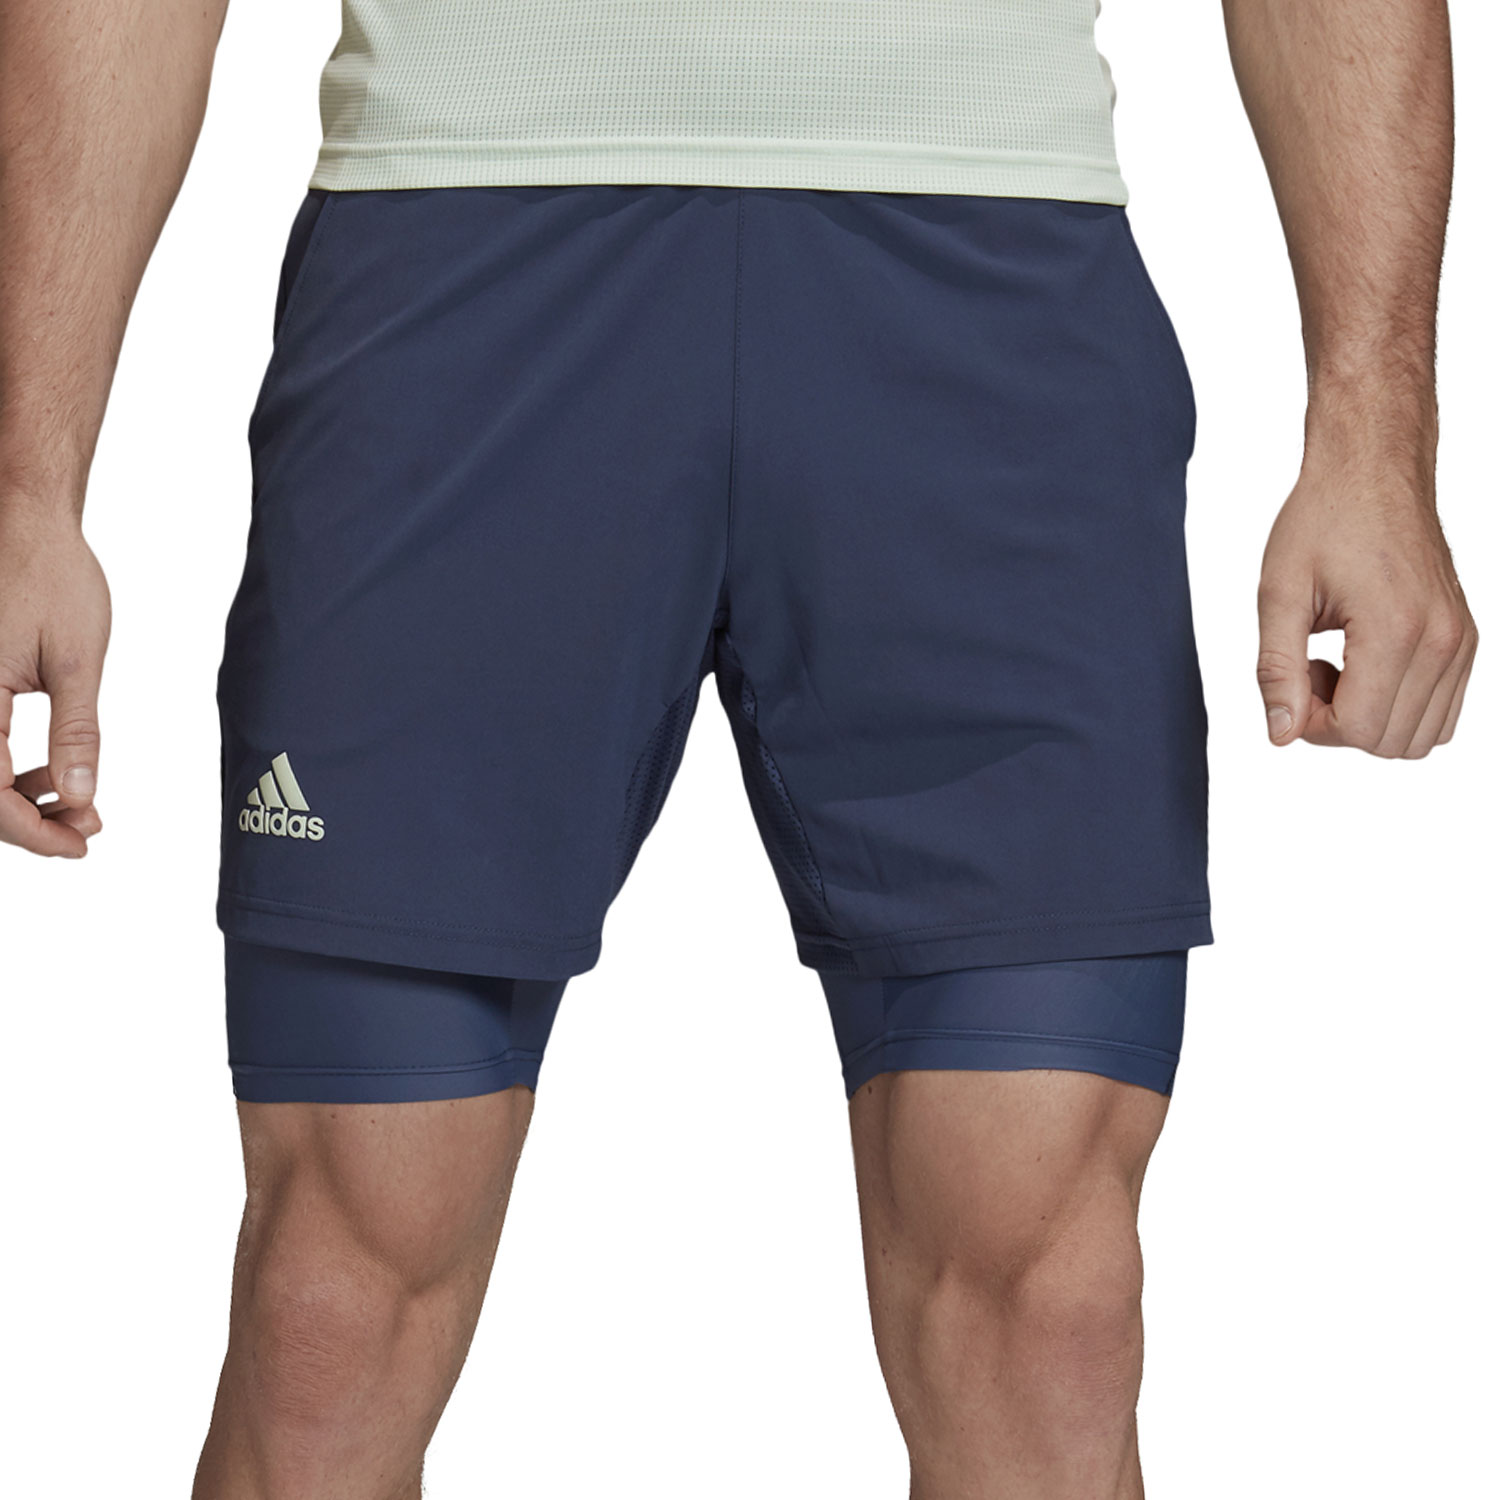 adidas Ergo 2 in 1 7in Men's Tennis Shorts - Tech Indigo